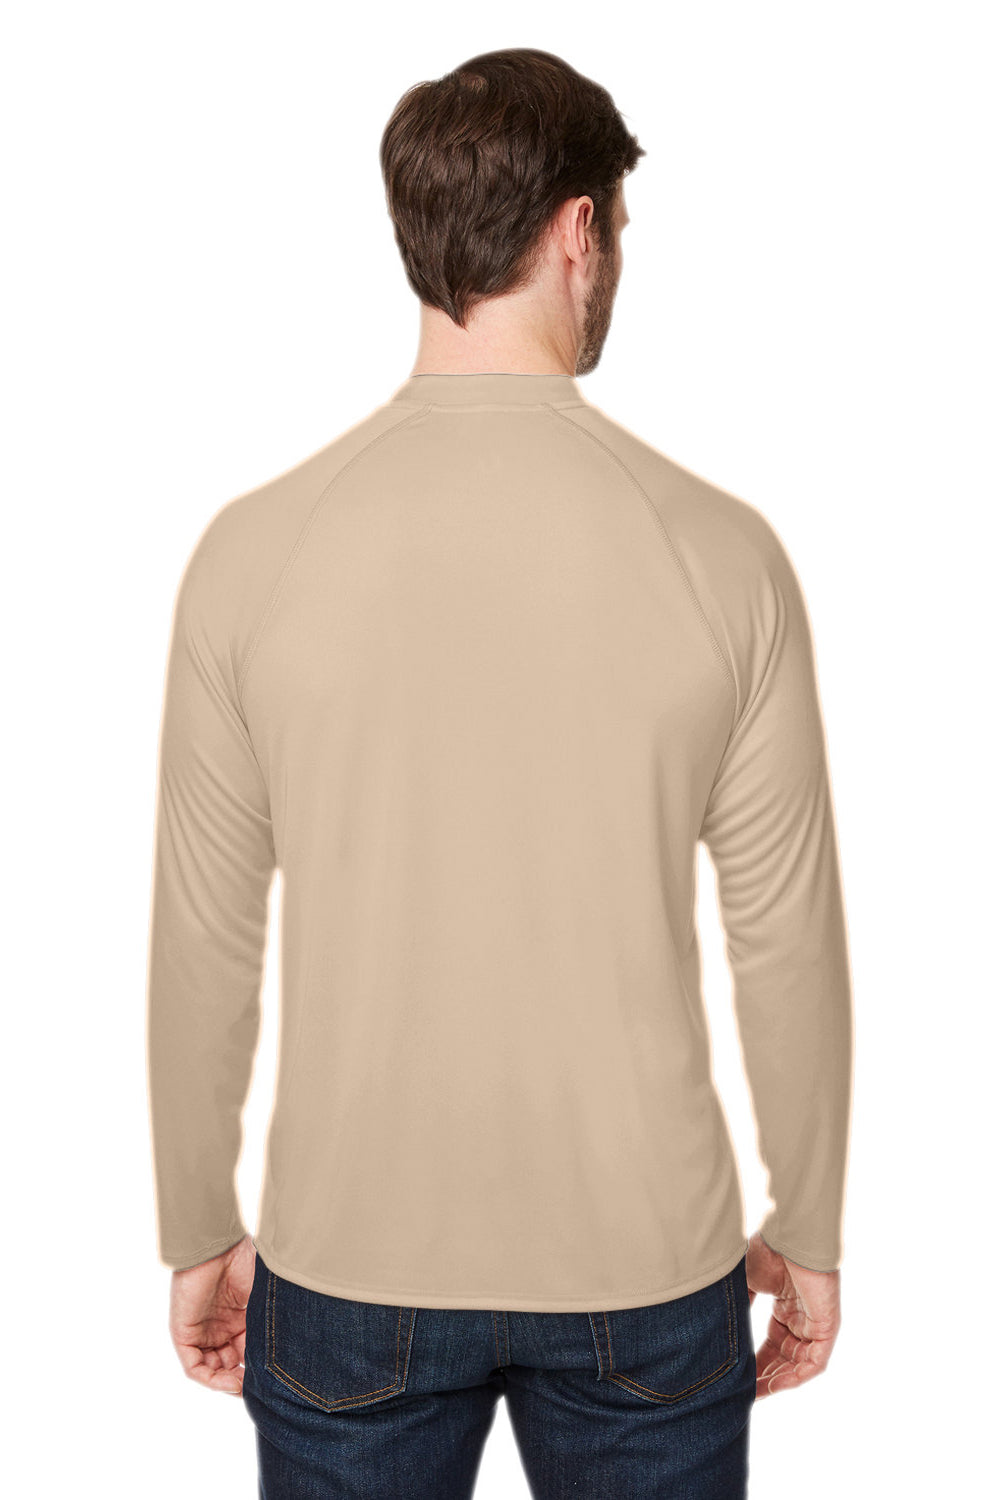 Core 365 CE110 Mens Ultra MVP Raglan Long Sleeve T-Shirt Stone Back